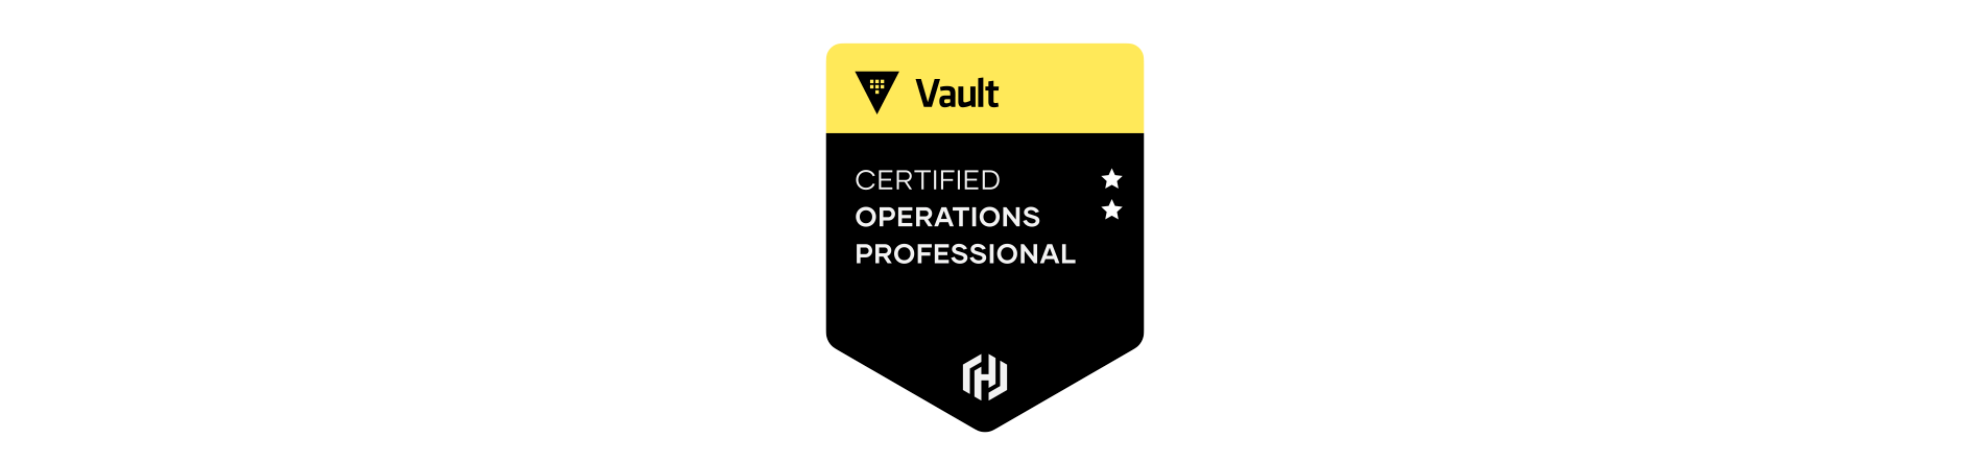 Vault certified ops professional badge